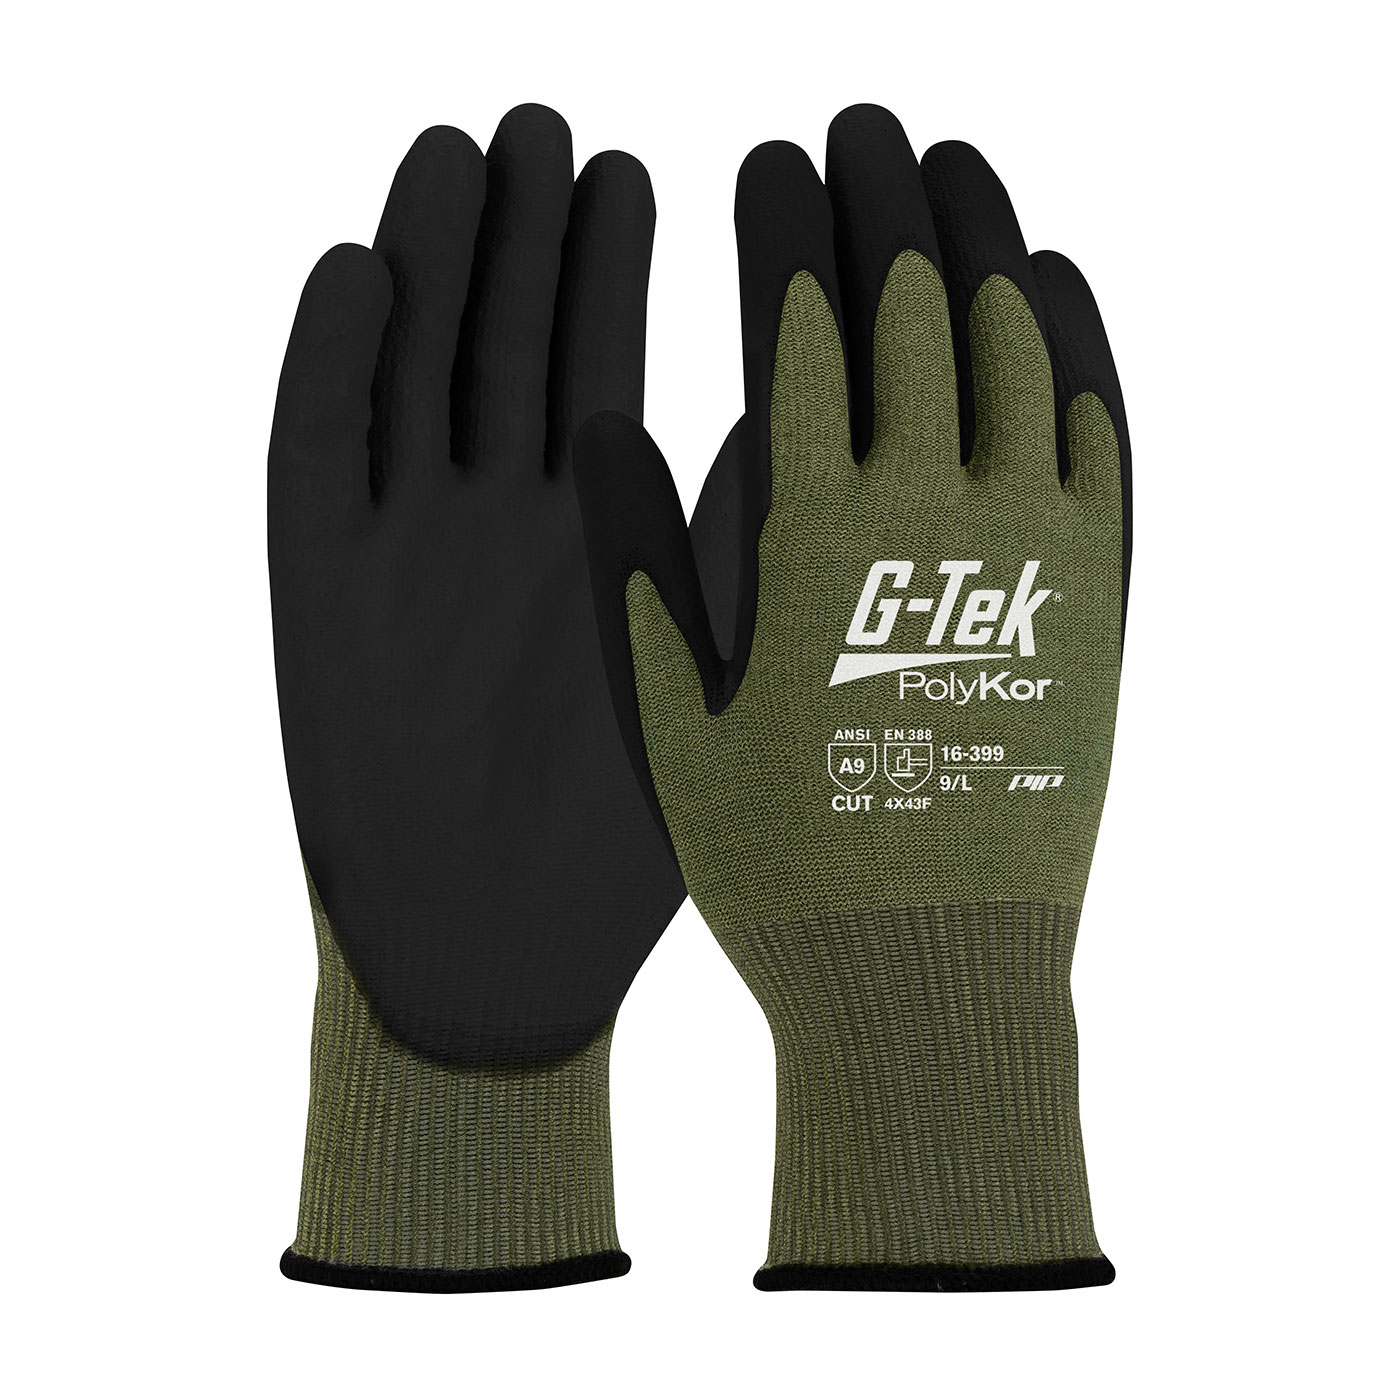 16-399 PIP®G-Tek®PolyKor®X7™无缝针织X7™混合手套，手掌和手指上涂有nefoam®涂层的微表面握把-触摸屏兼容